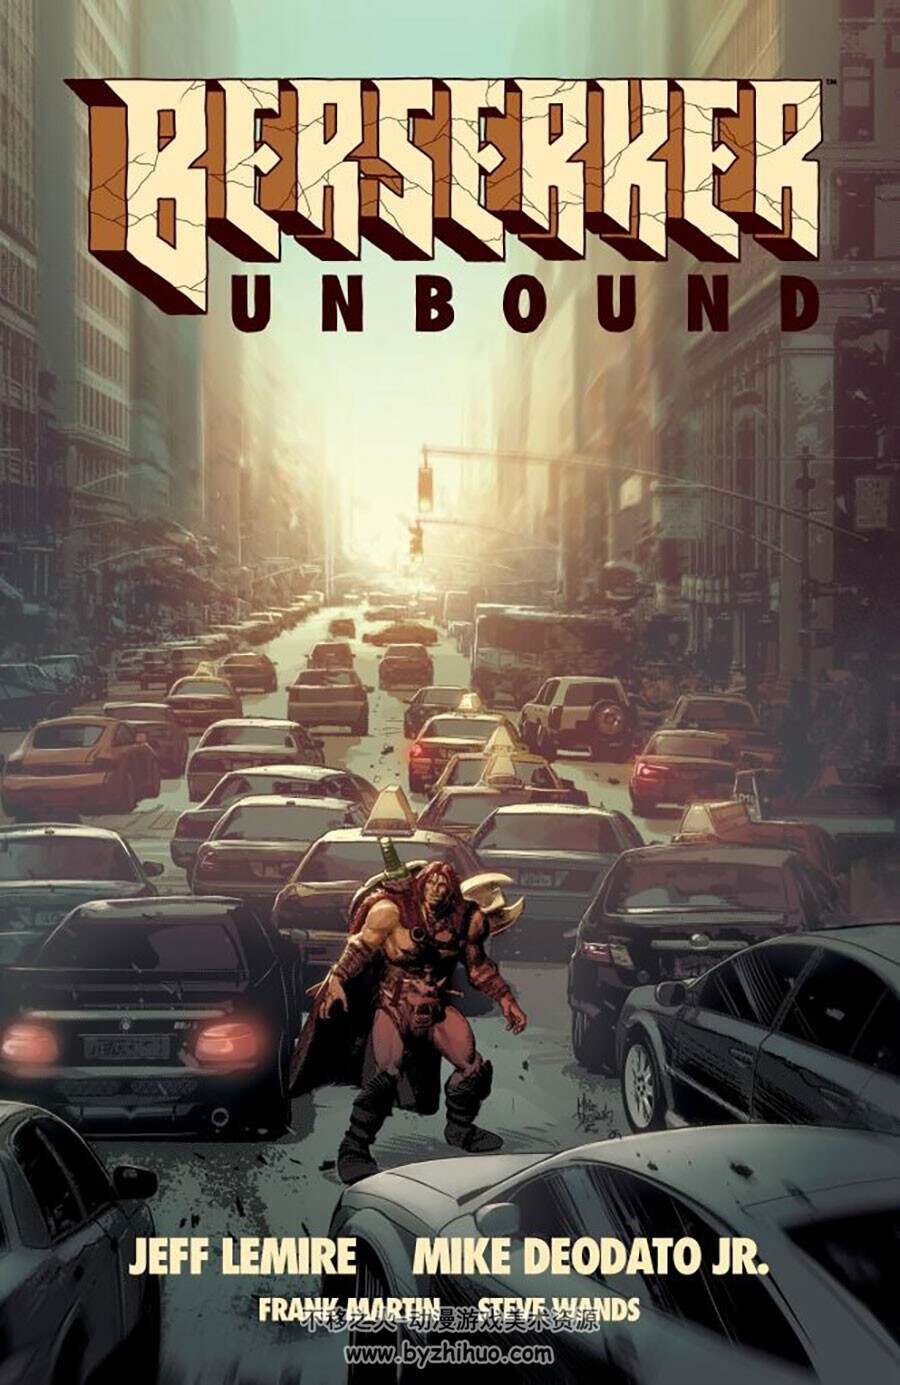 Berserker Unbound 第1册 Jeff Lemire 漫画下载